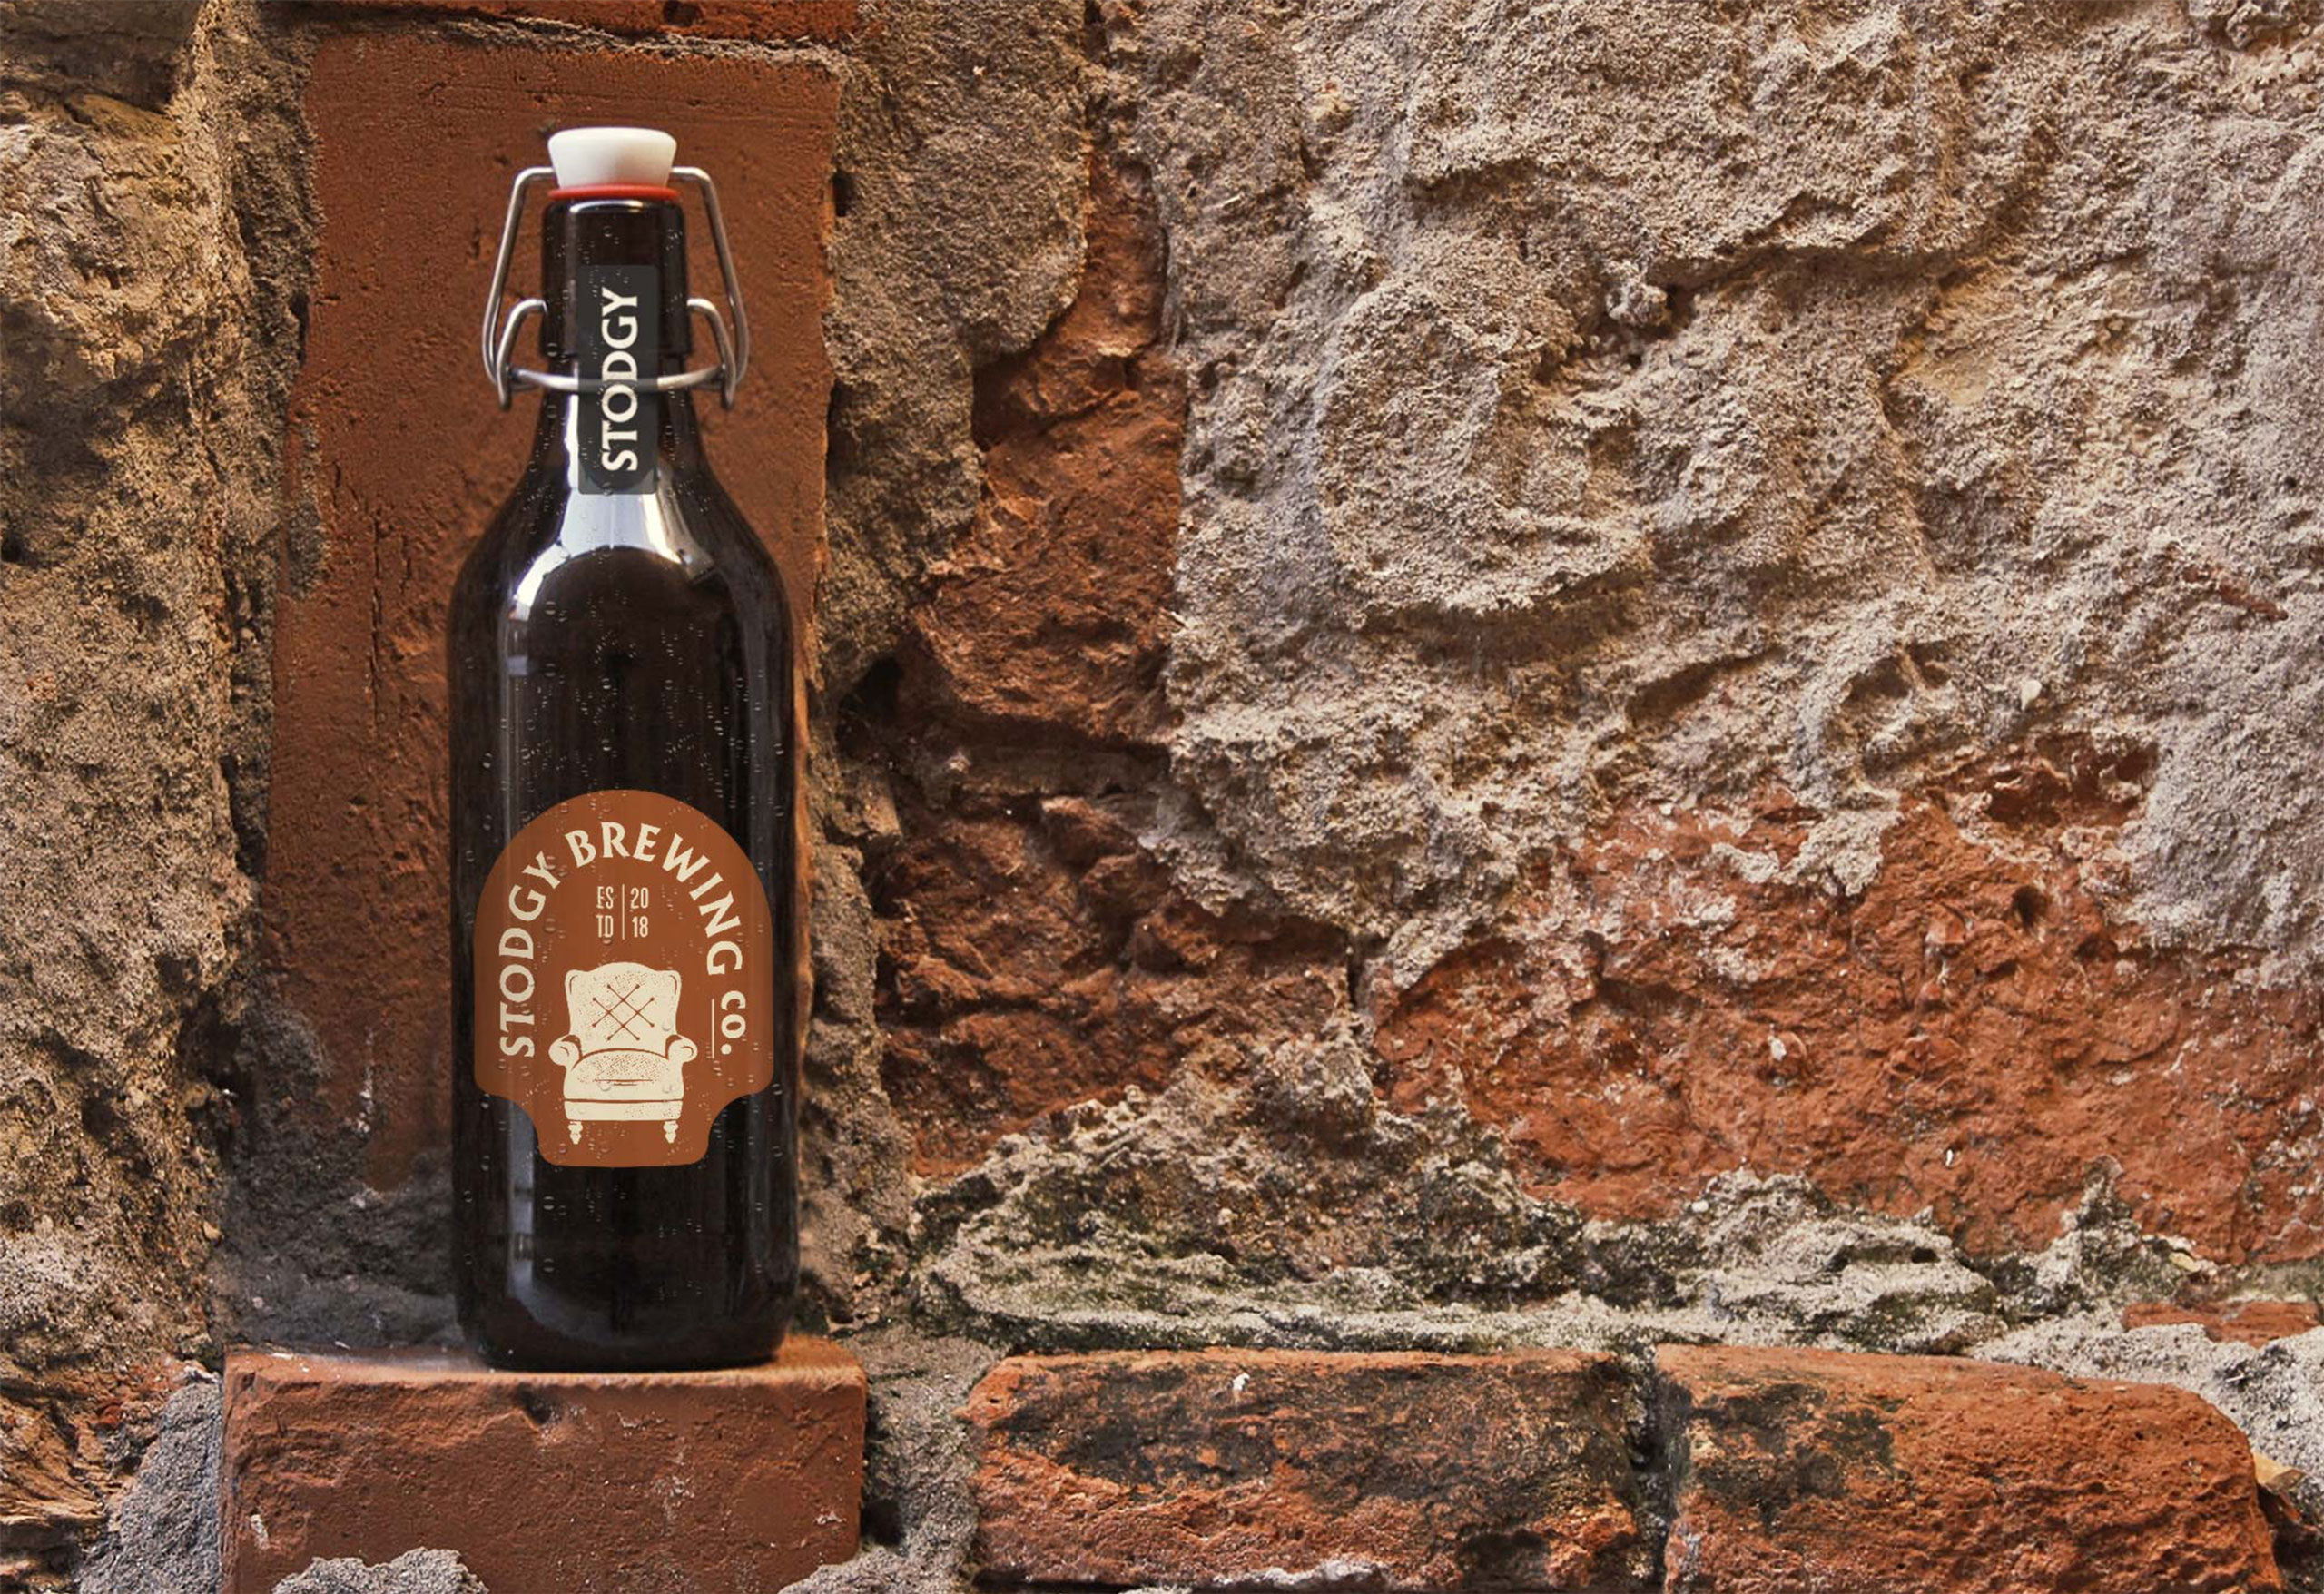 Stodgy Brewing Company Hero image. Bottle with logo